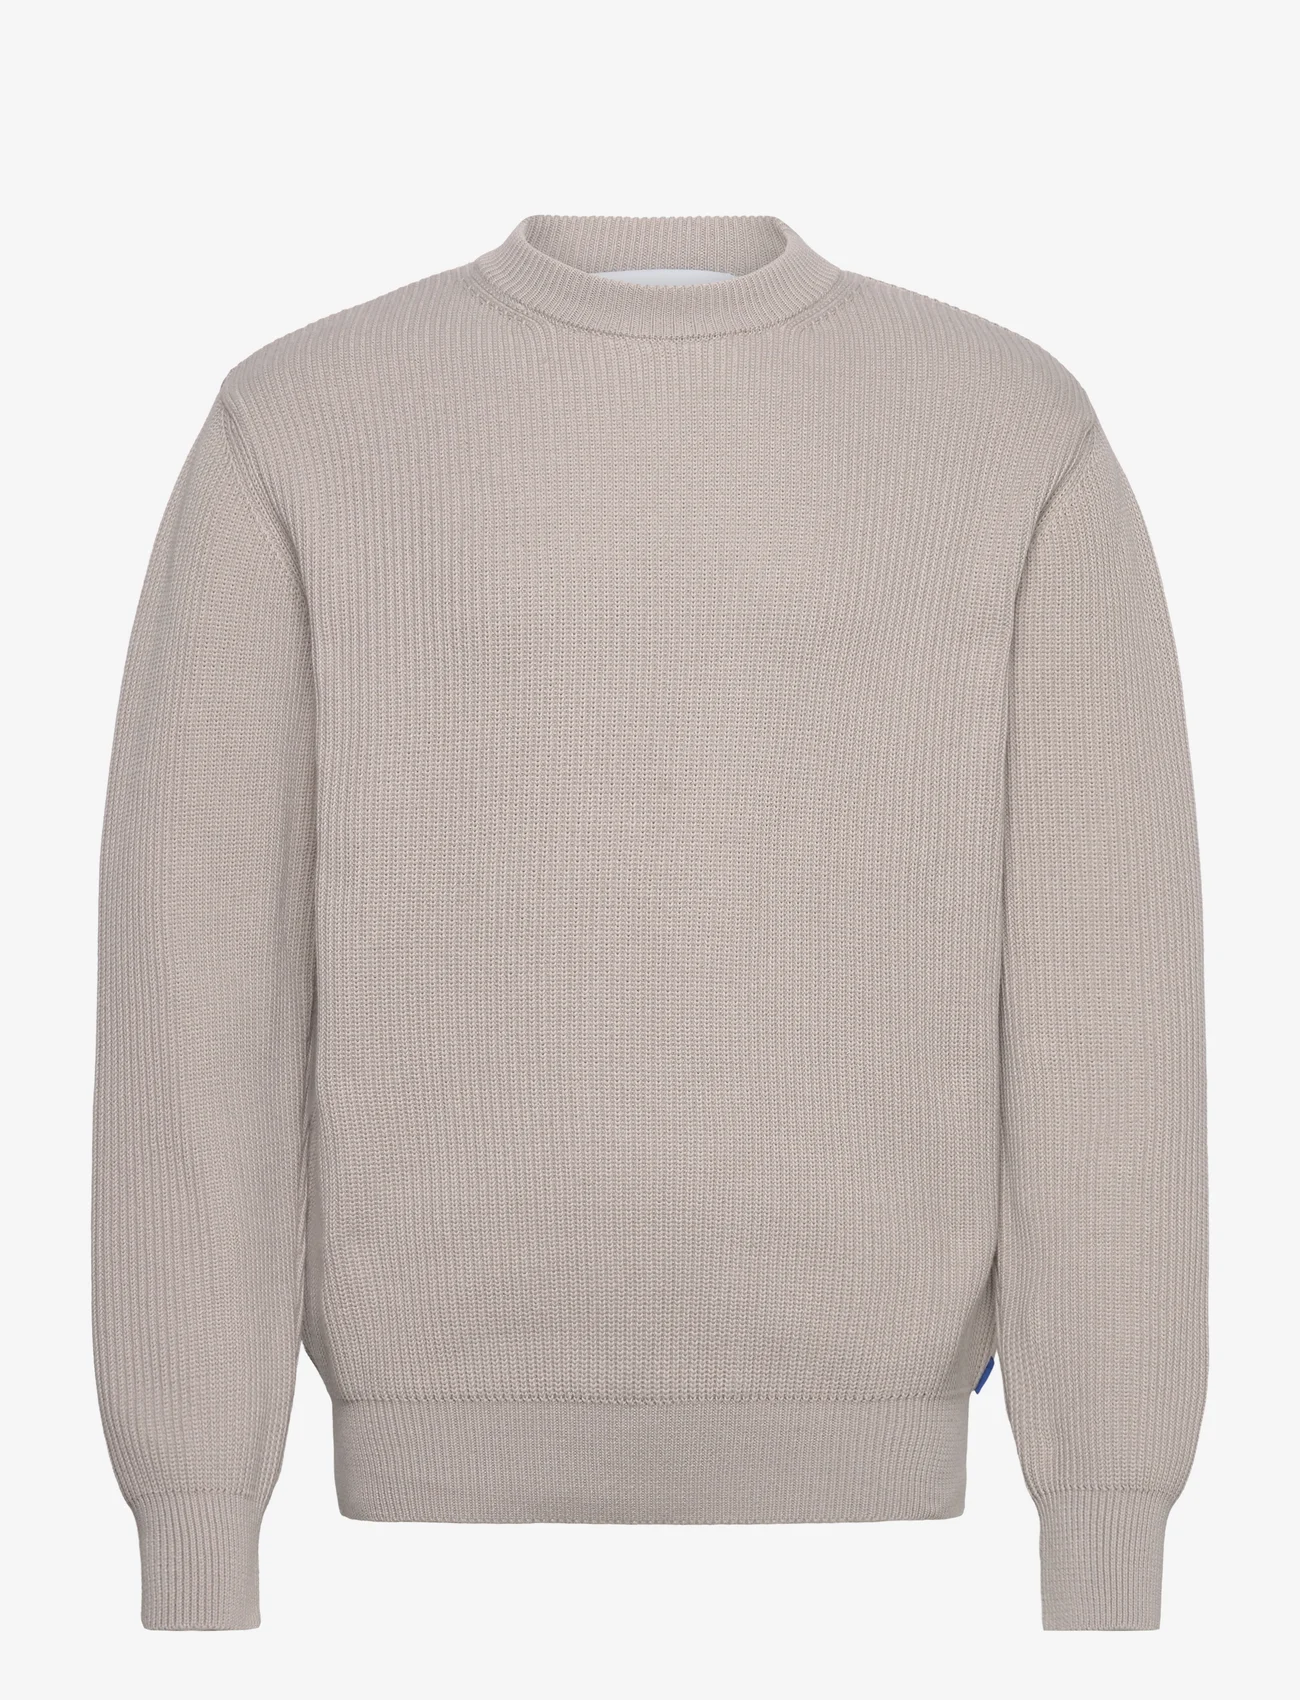 Garment Project - Round Neck Knit - Light Grey - megztinis su apvalios formos apykakle - light grey - 0